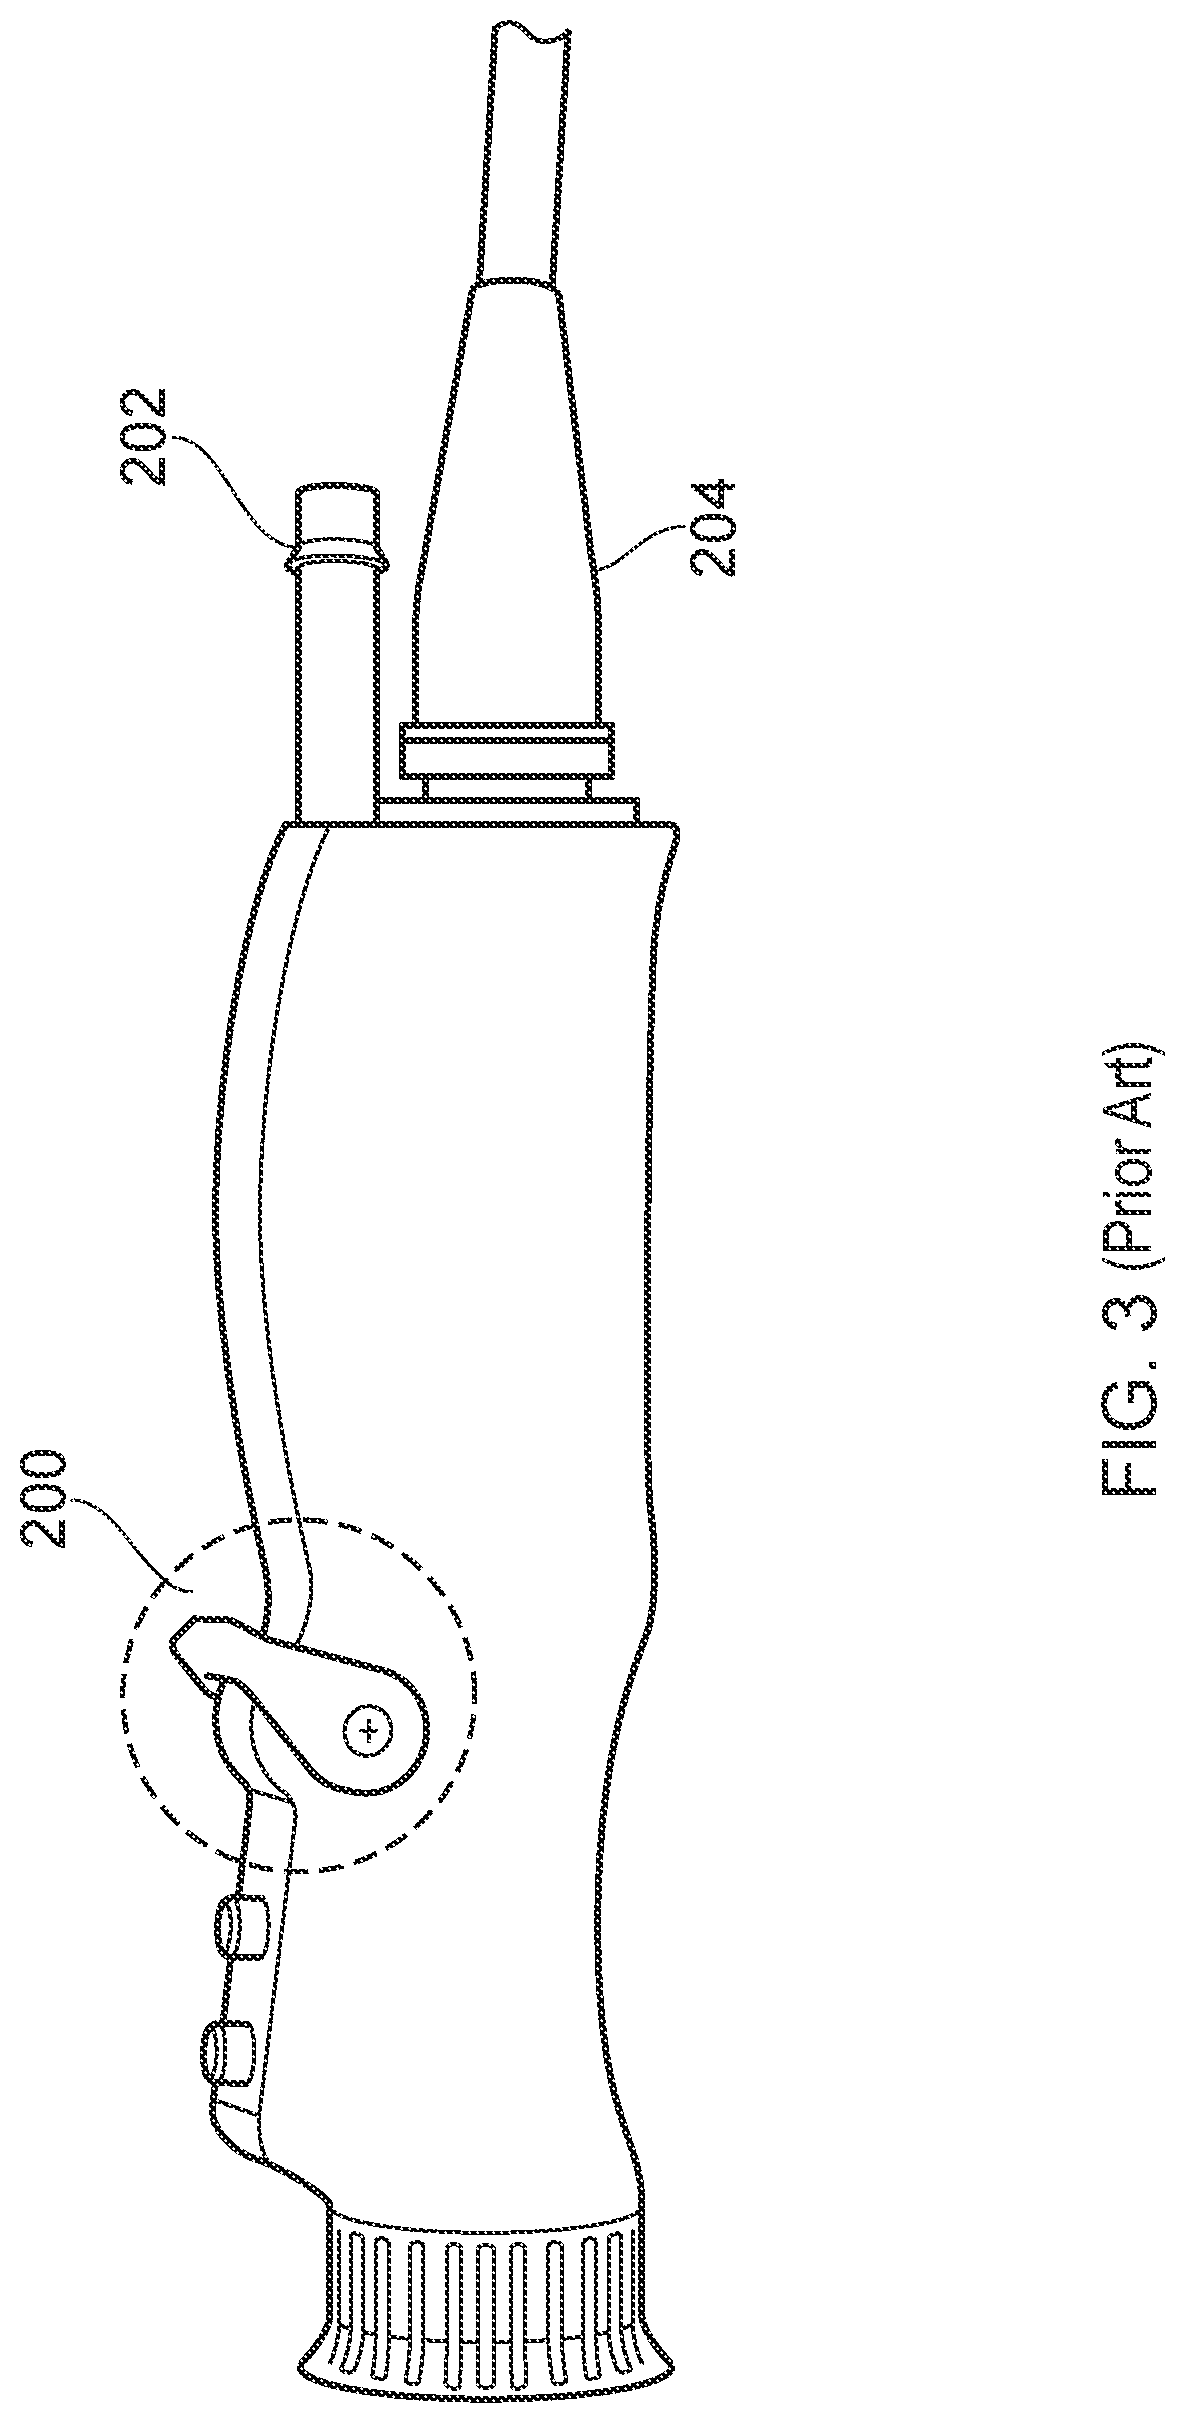 Flow valve position sensor for an electrosurgical device